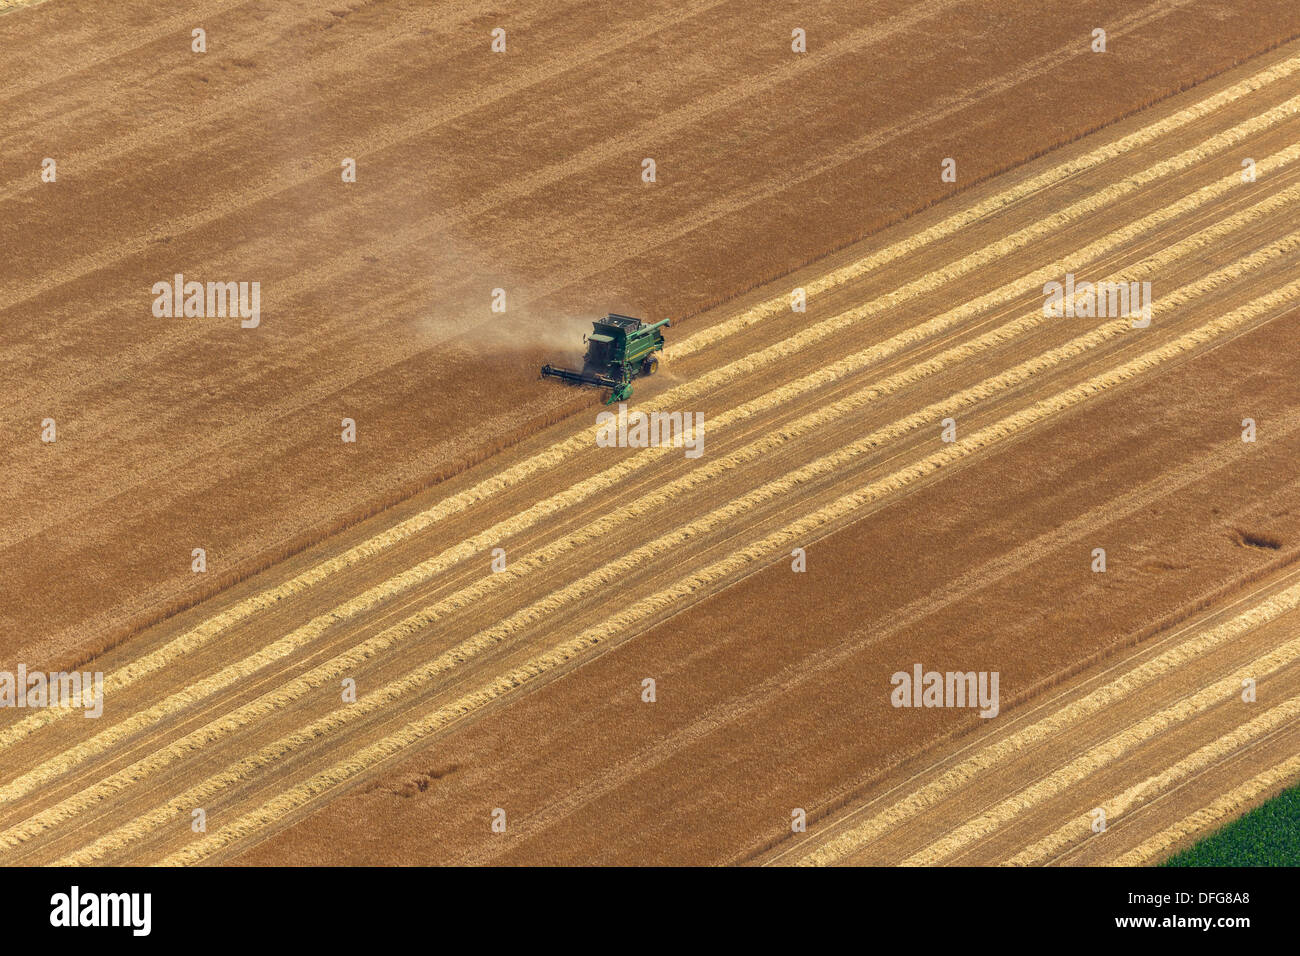 Aerial view, combine harvester harvesting a grain crop, Dorsten, North Rhine-Westphalia, Germany Stock Photo